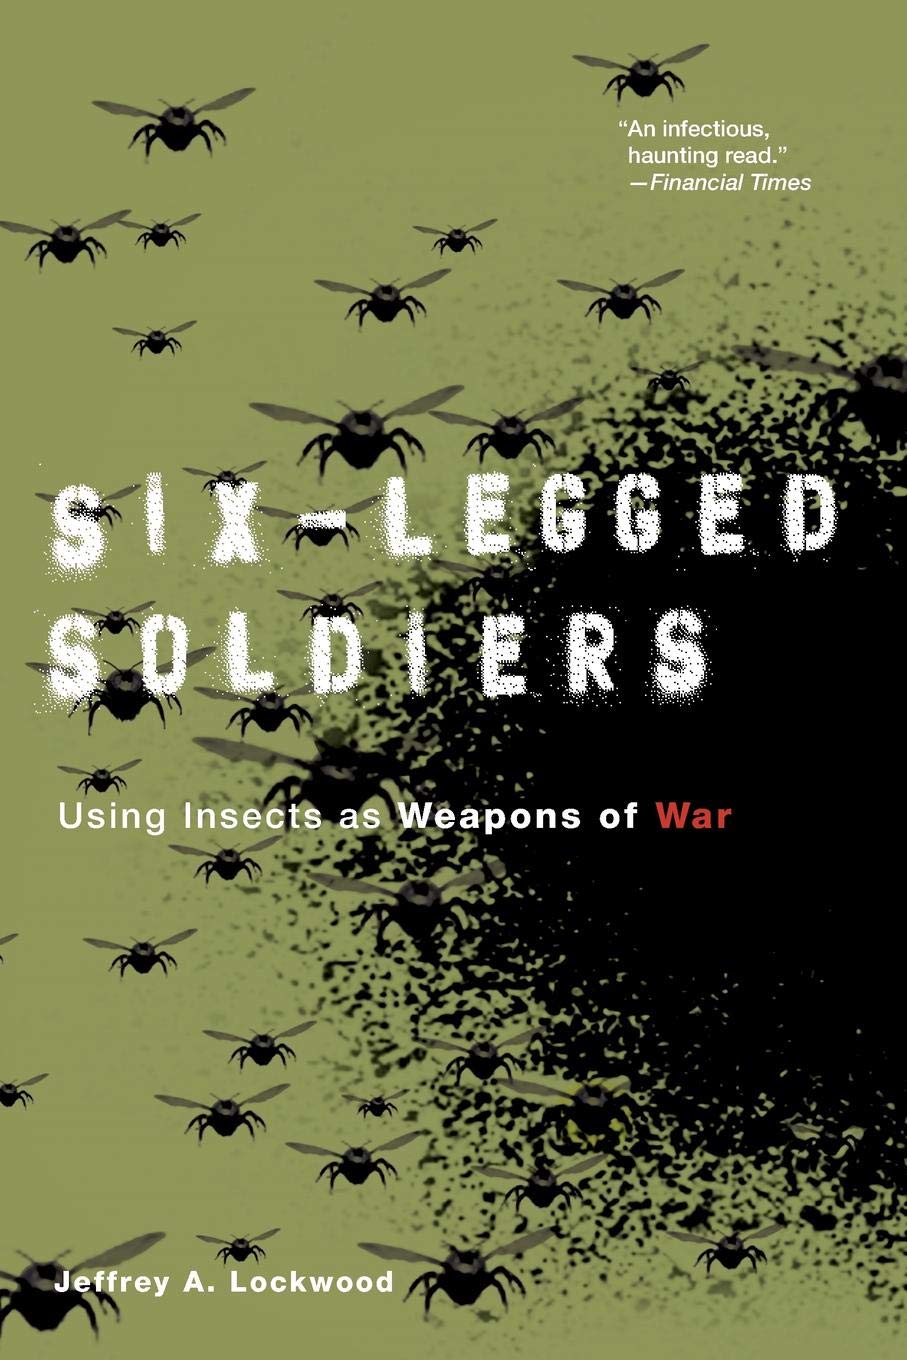 Six-legged Soldiers